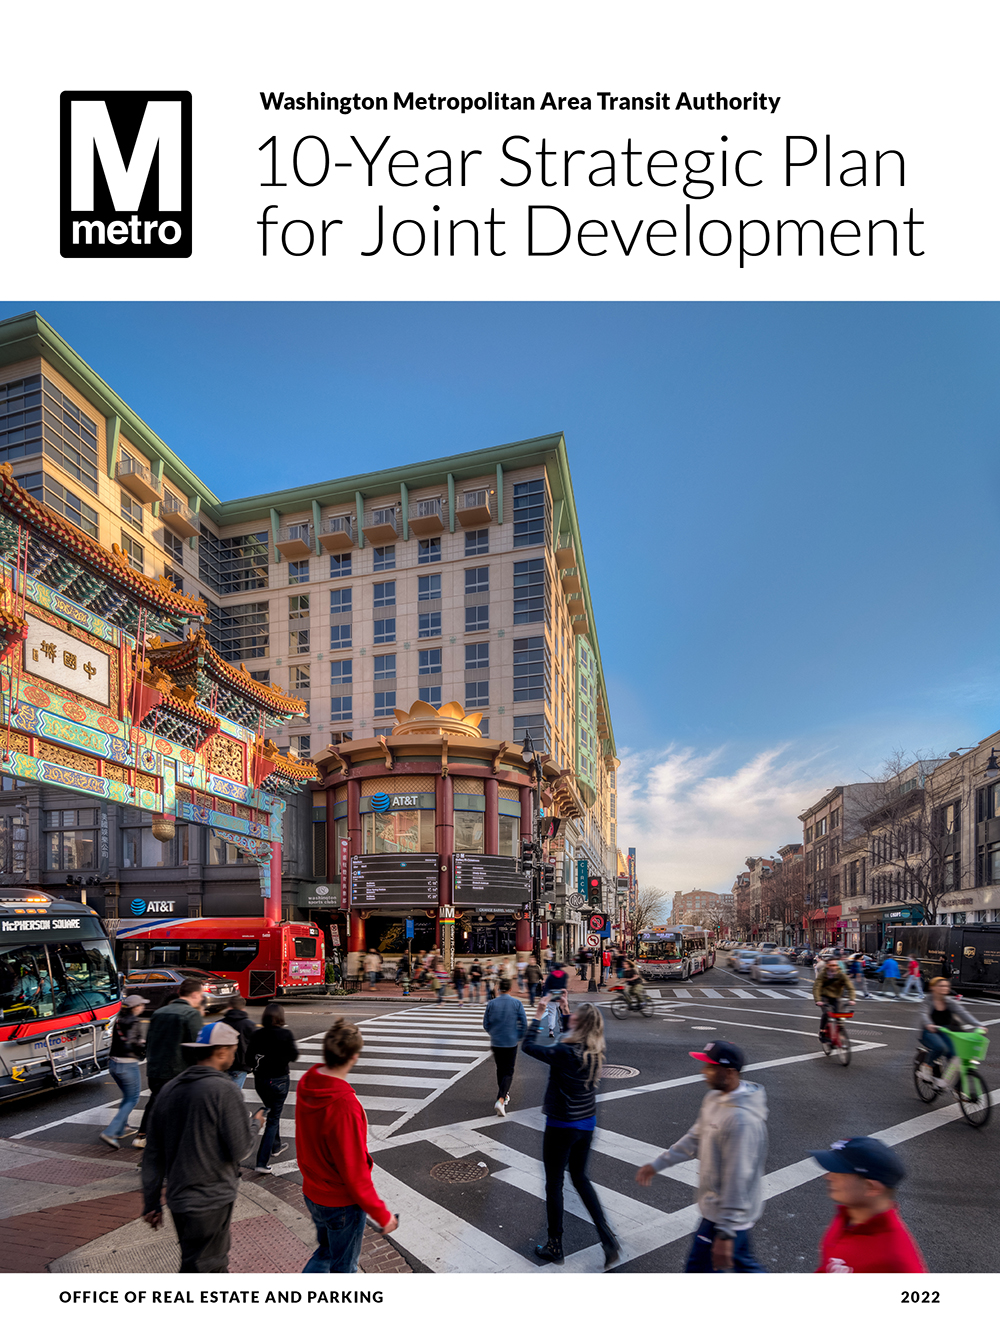 Ten Year Strategic Plan for Joint Development cover